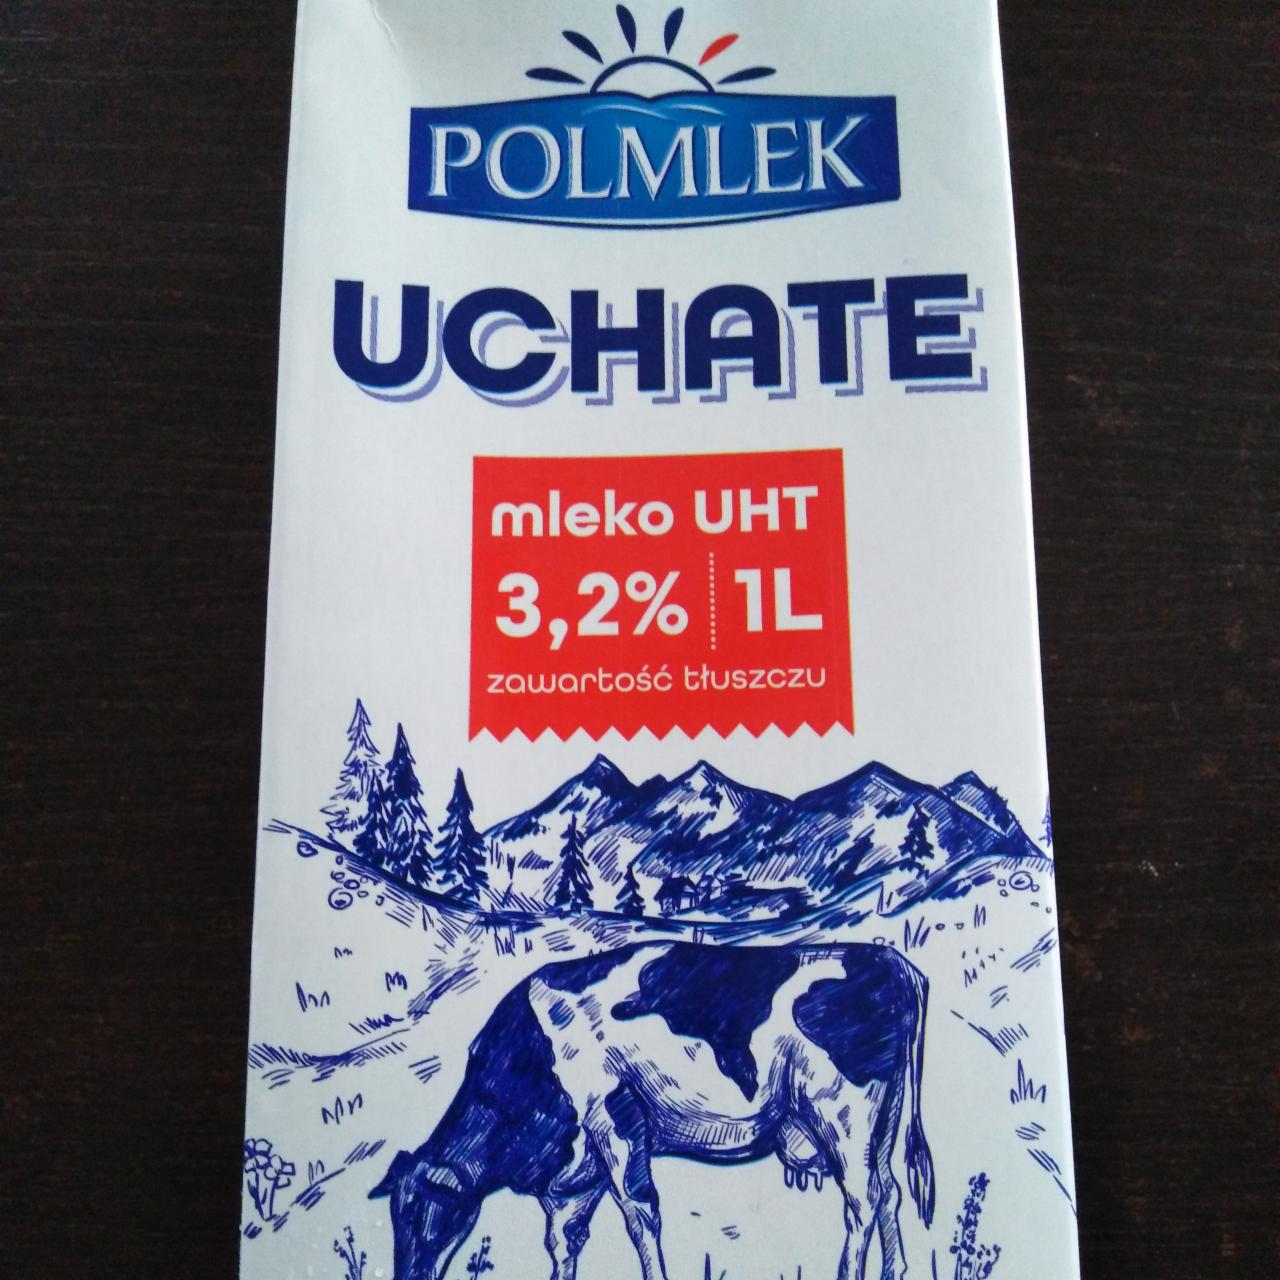 Fotografie - Uchate mleko UHT 3,2% Polmlek